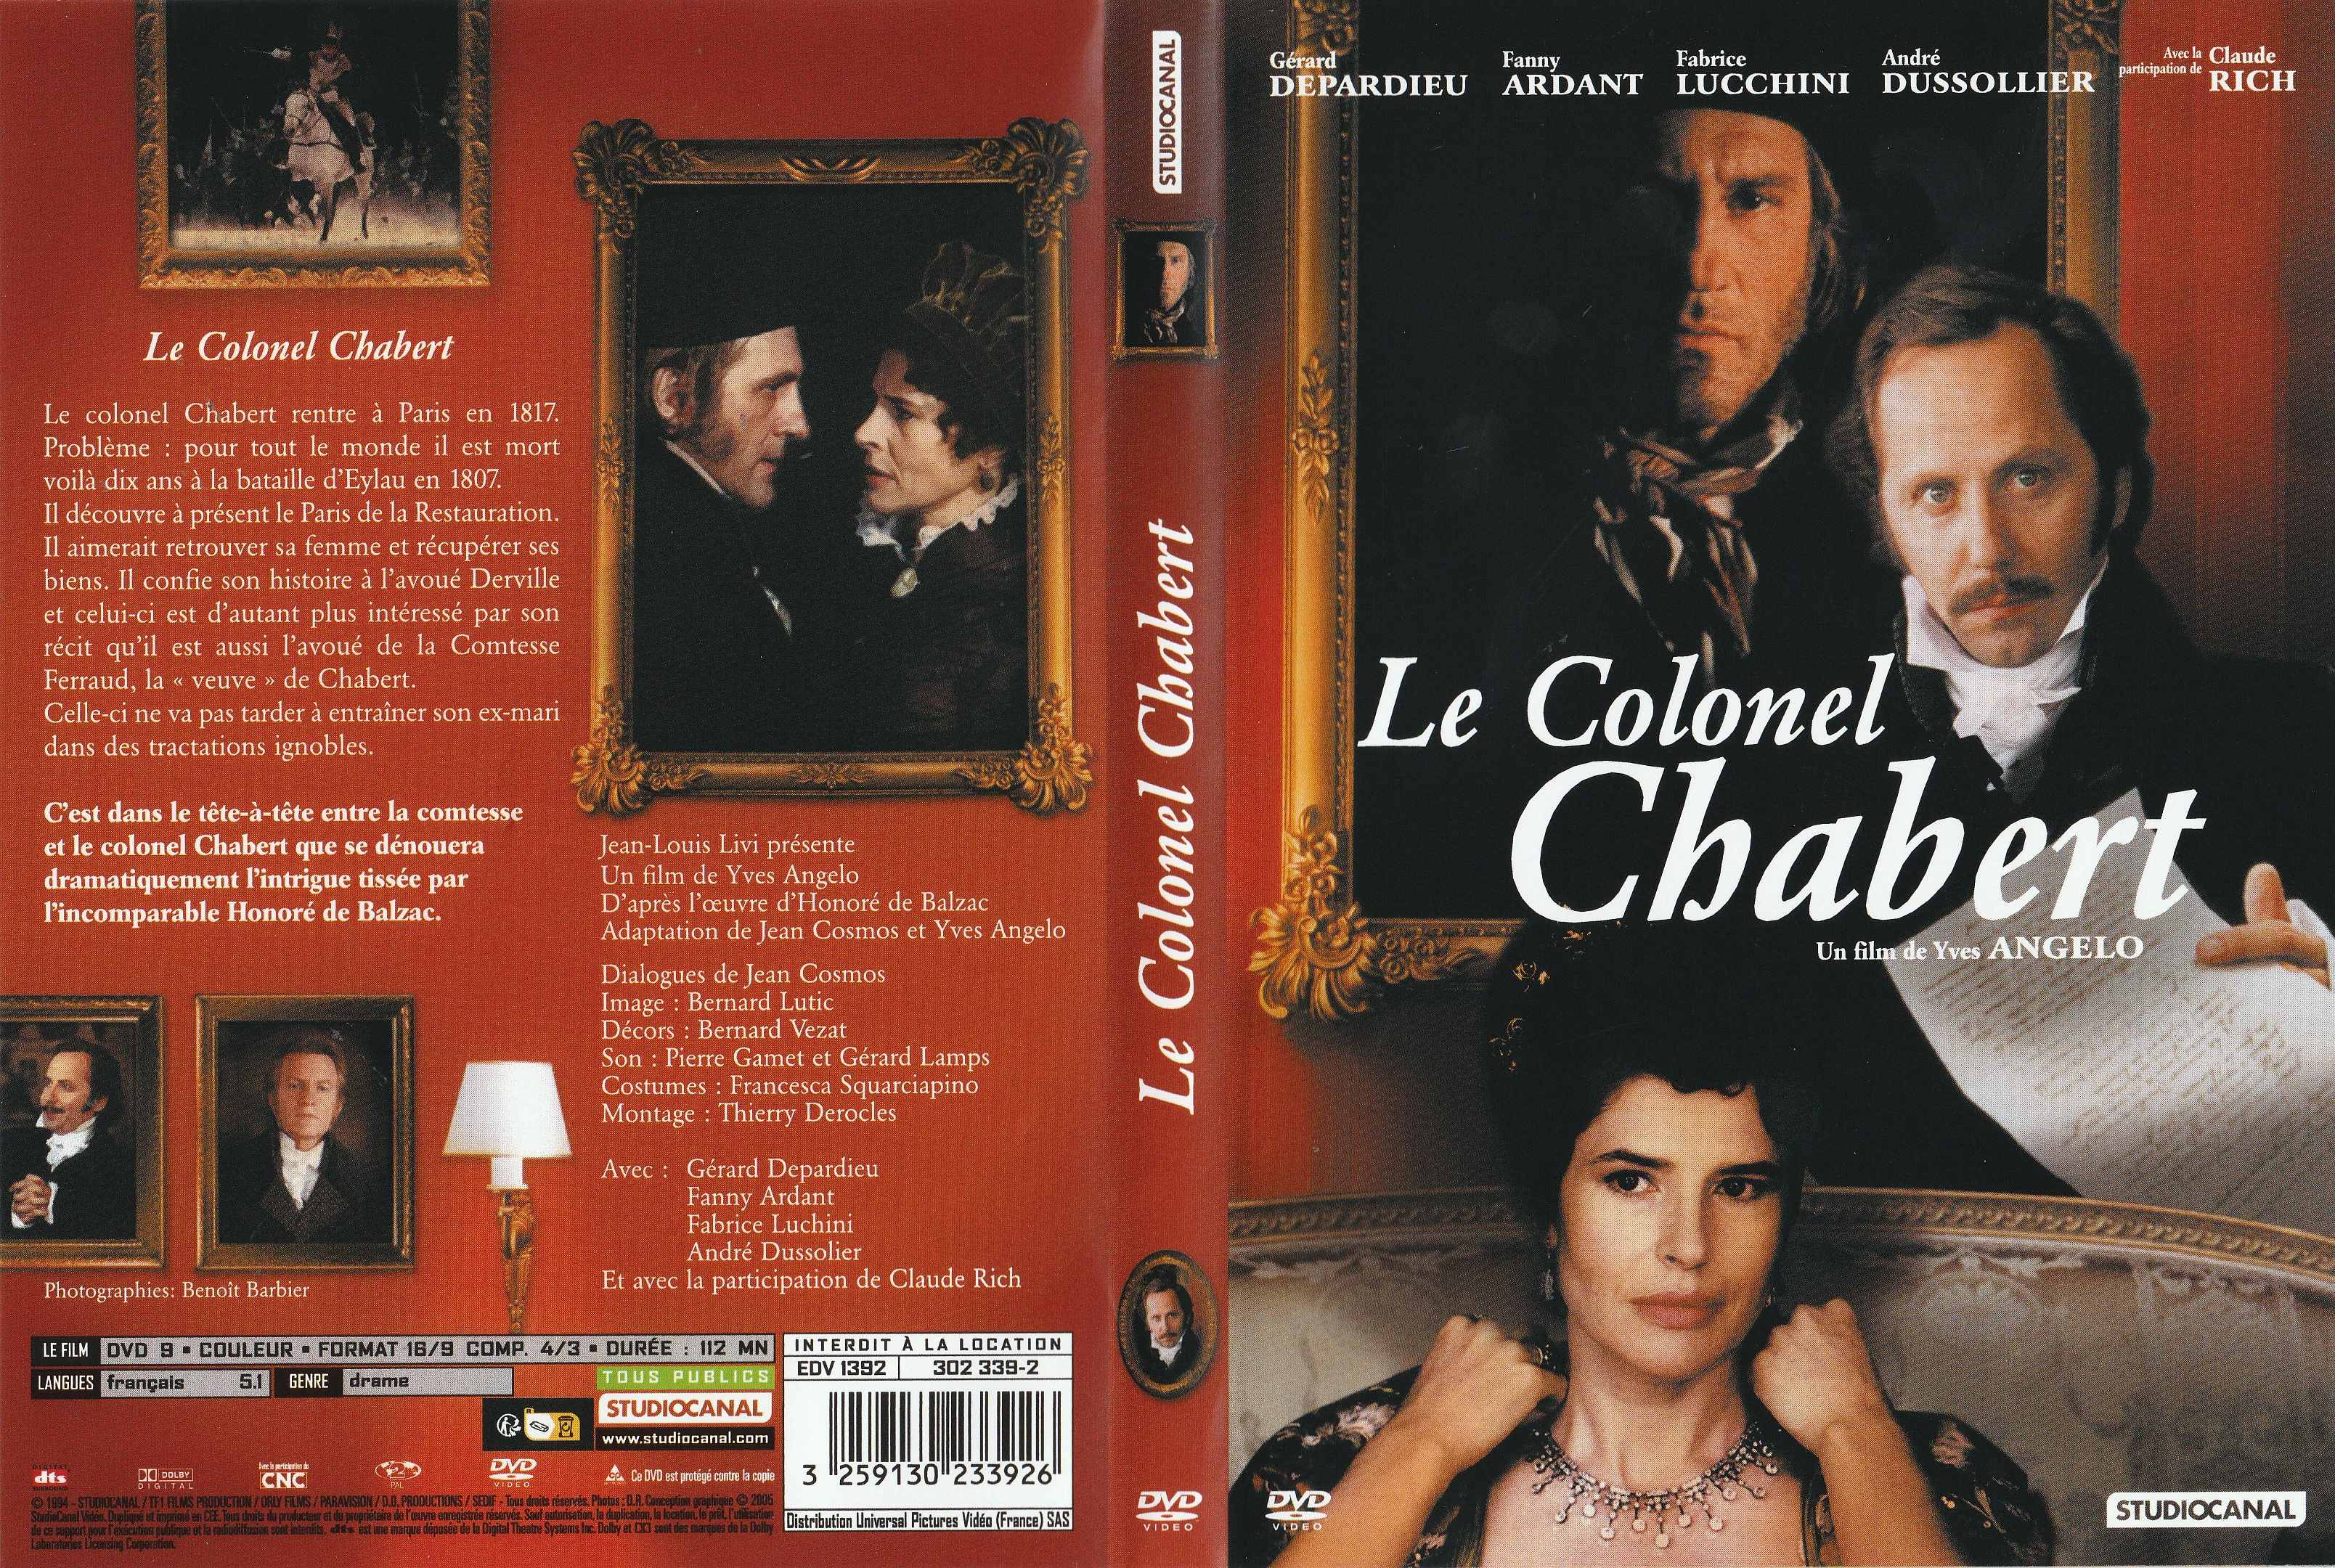 Jaquette DVD Le colonel Chabert v2